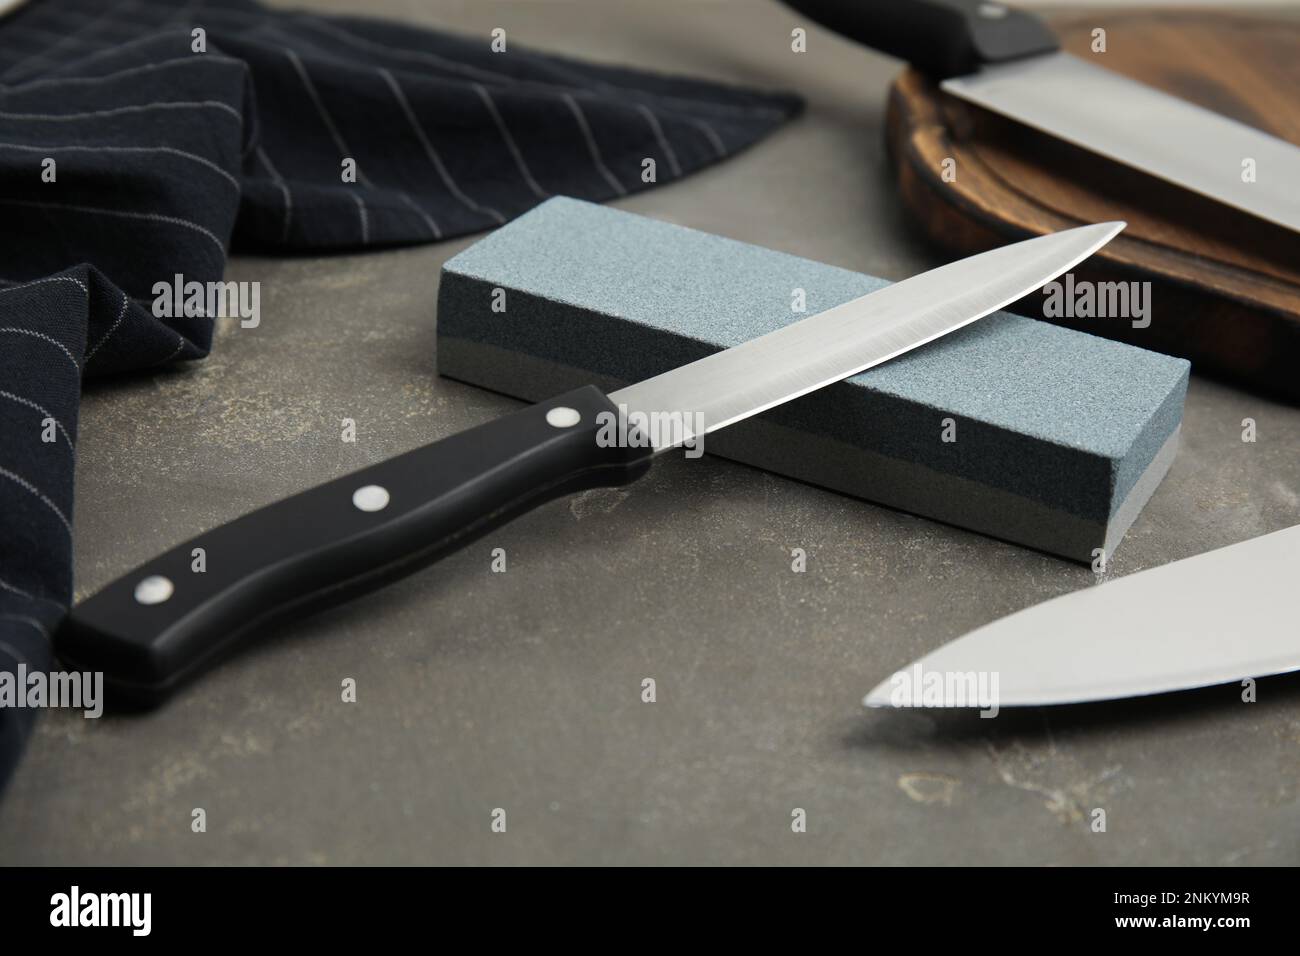 https://c8.alamy.com/comp/2NKYM9R/sharpening-stone-and-knives-on-grey-table-closeup-2NKYM9R.jpg